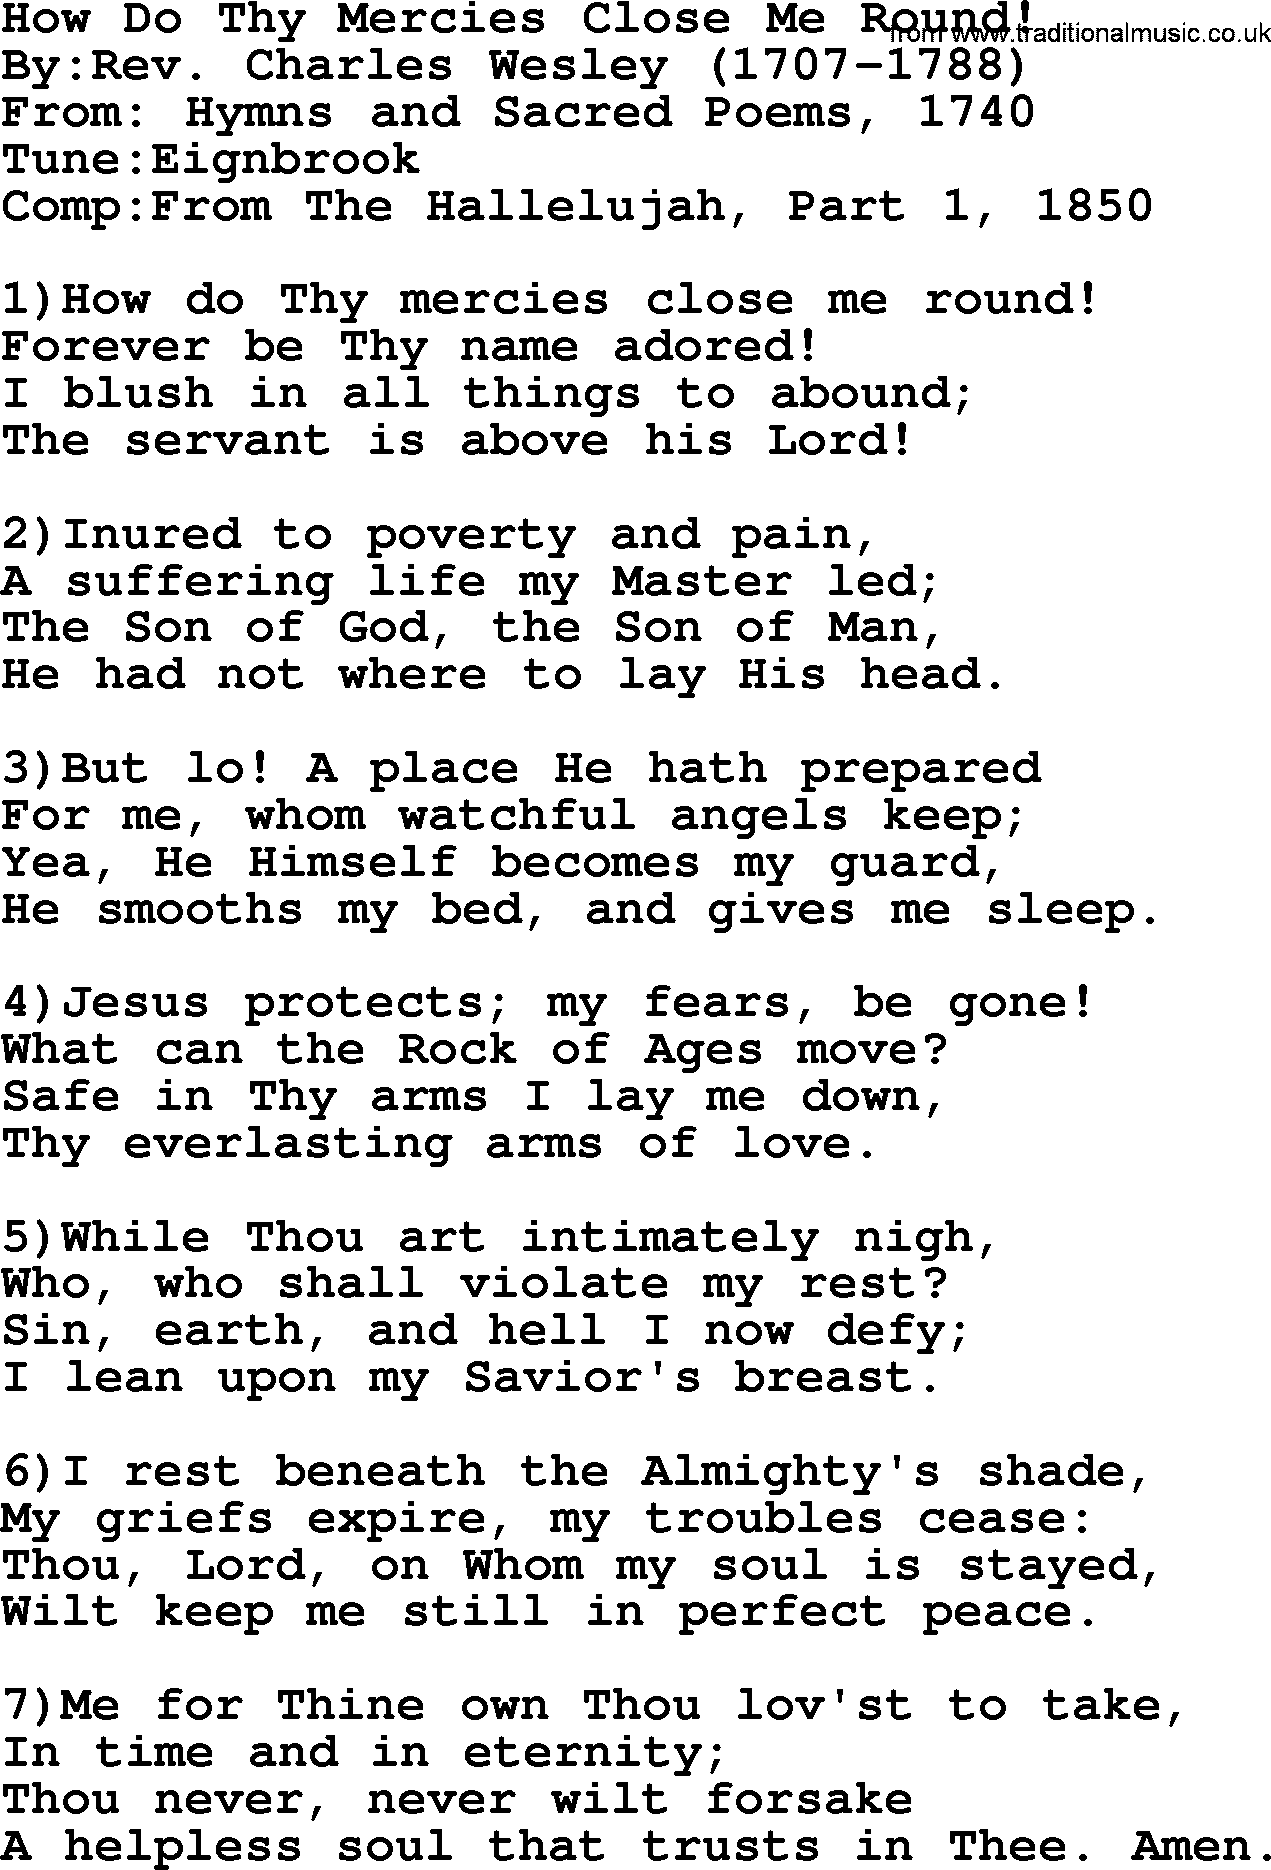 Methodist Hymn: How Do Thy Mercies Close Me Round!, lyrics